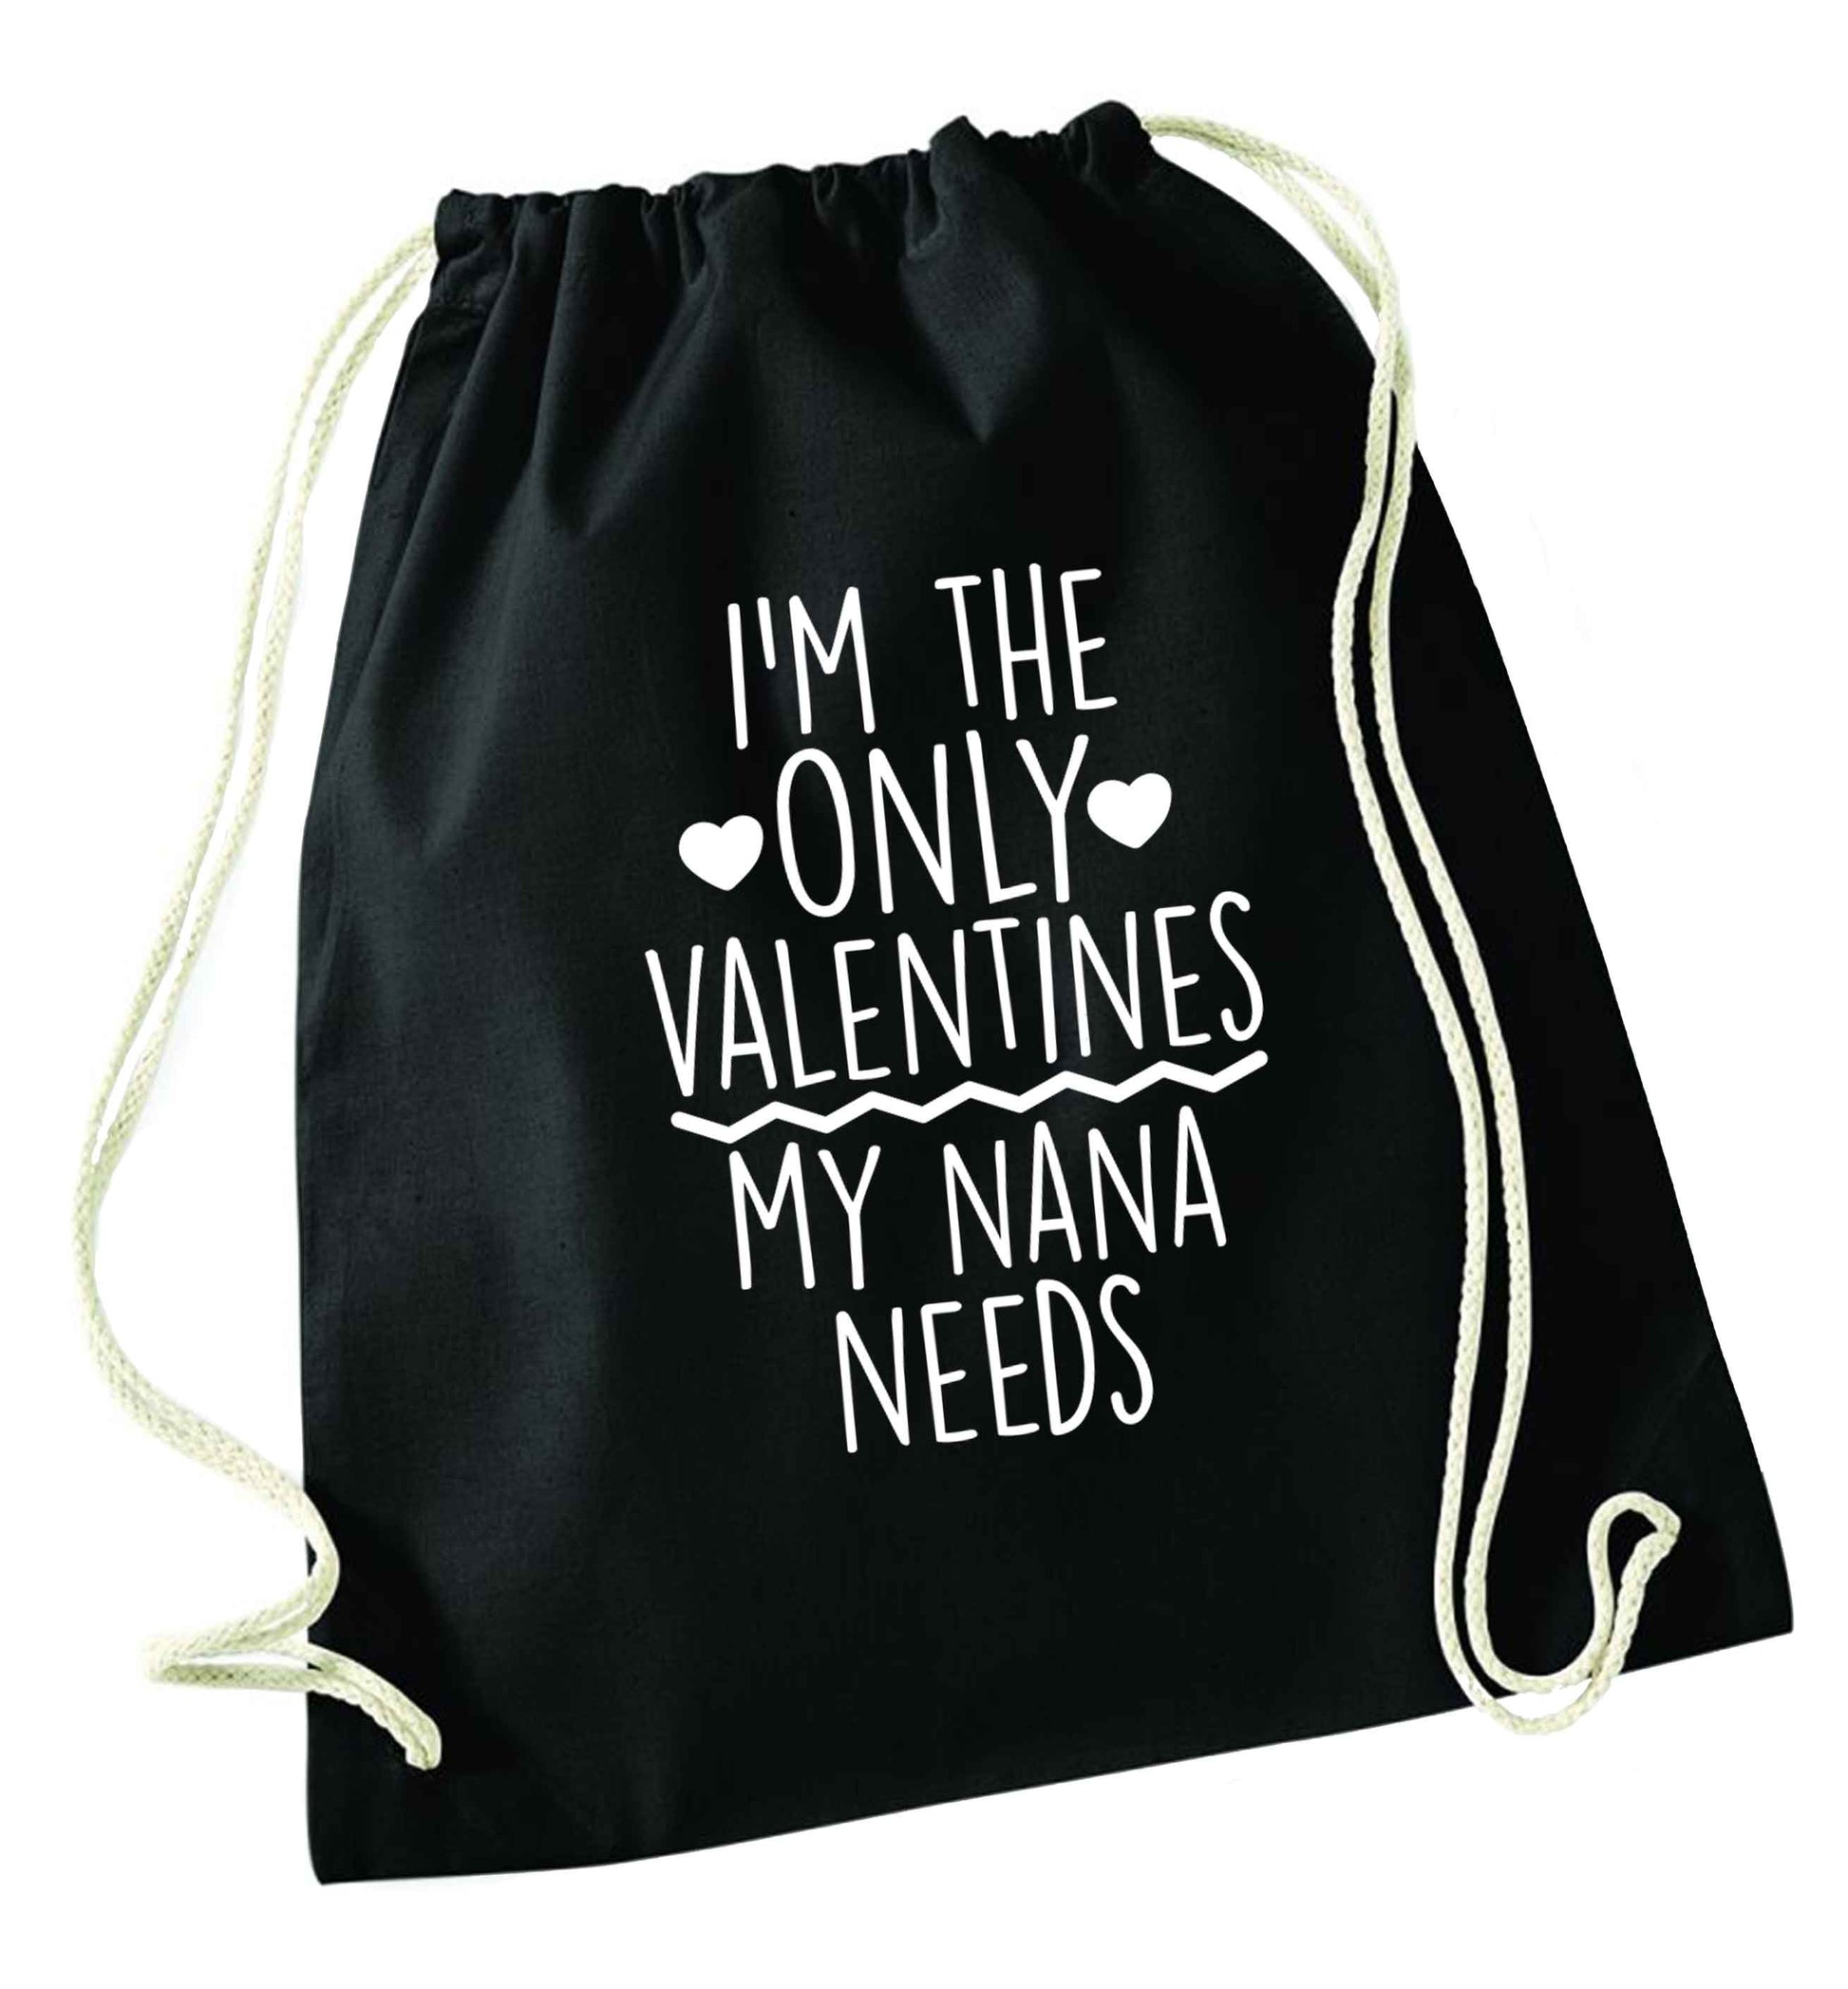 I'm the only valentines my nana needs black drawstring bag